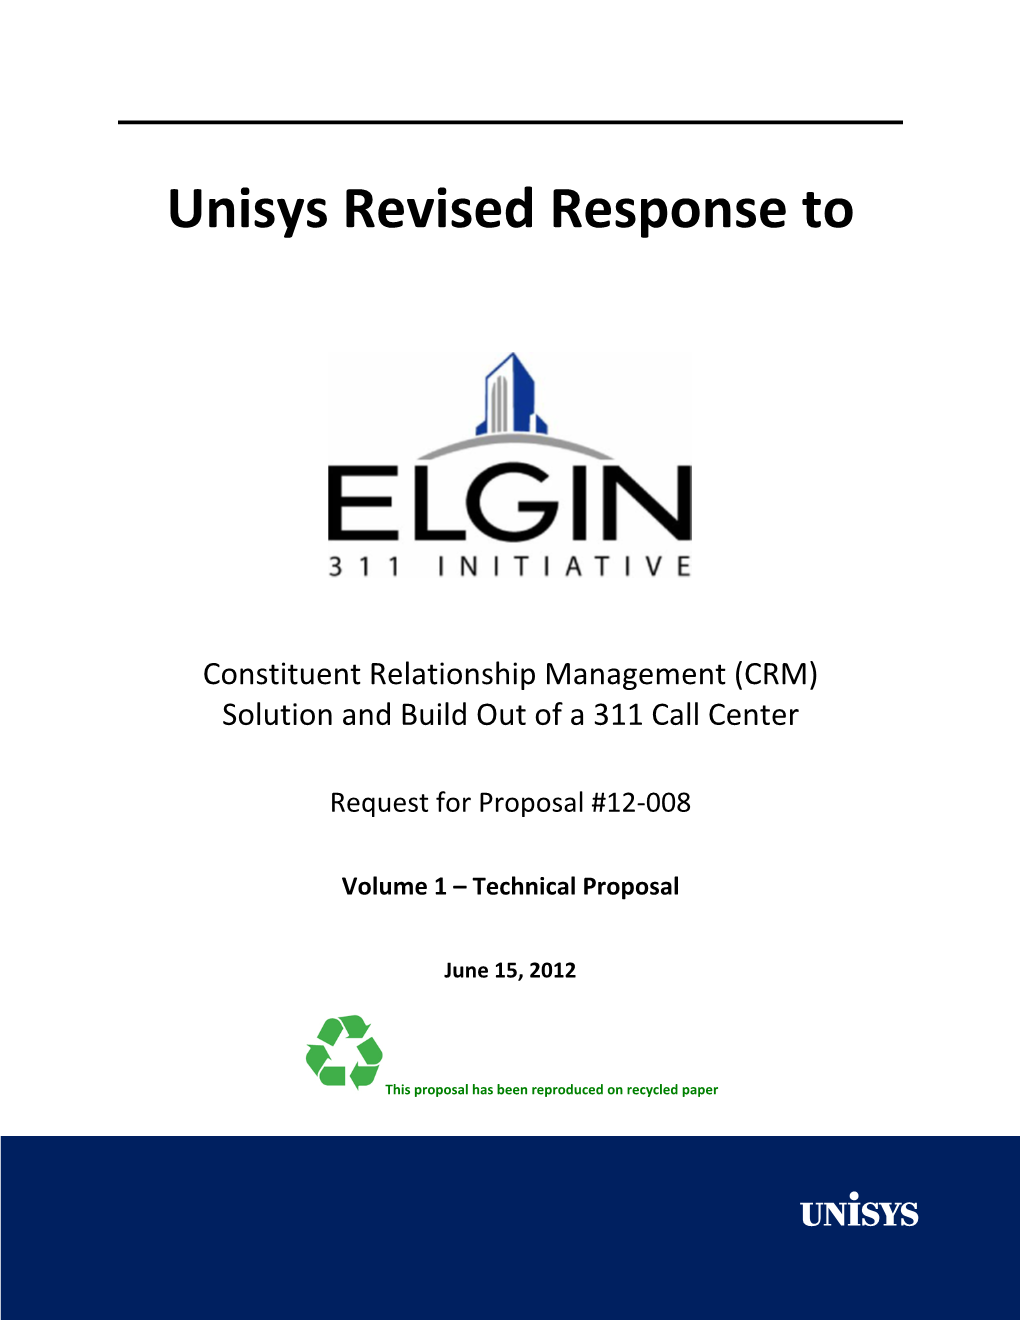 Unisys Revised Response To